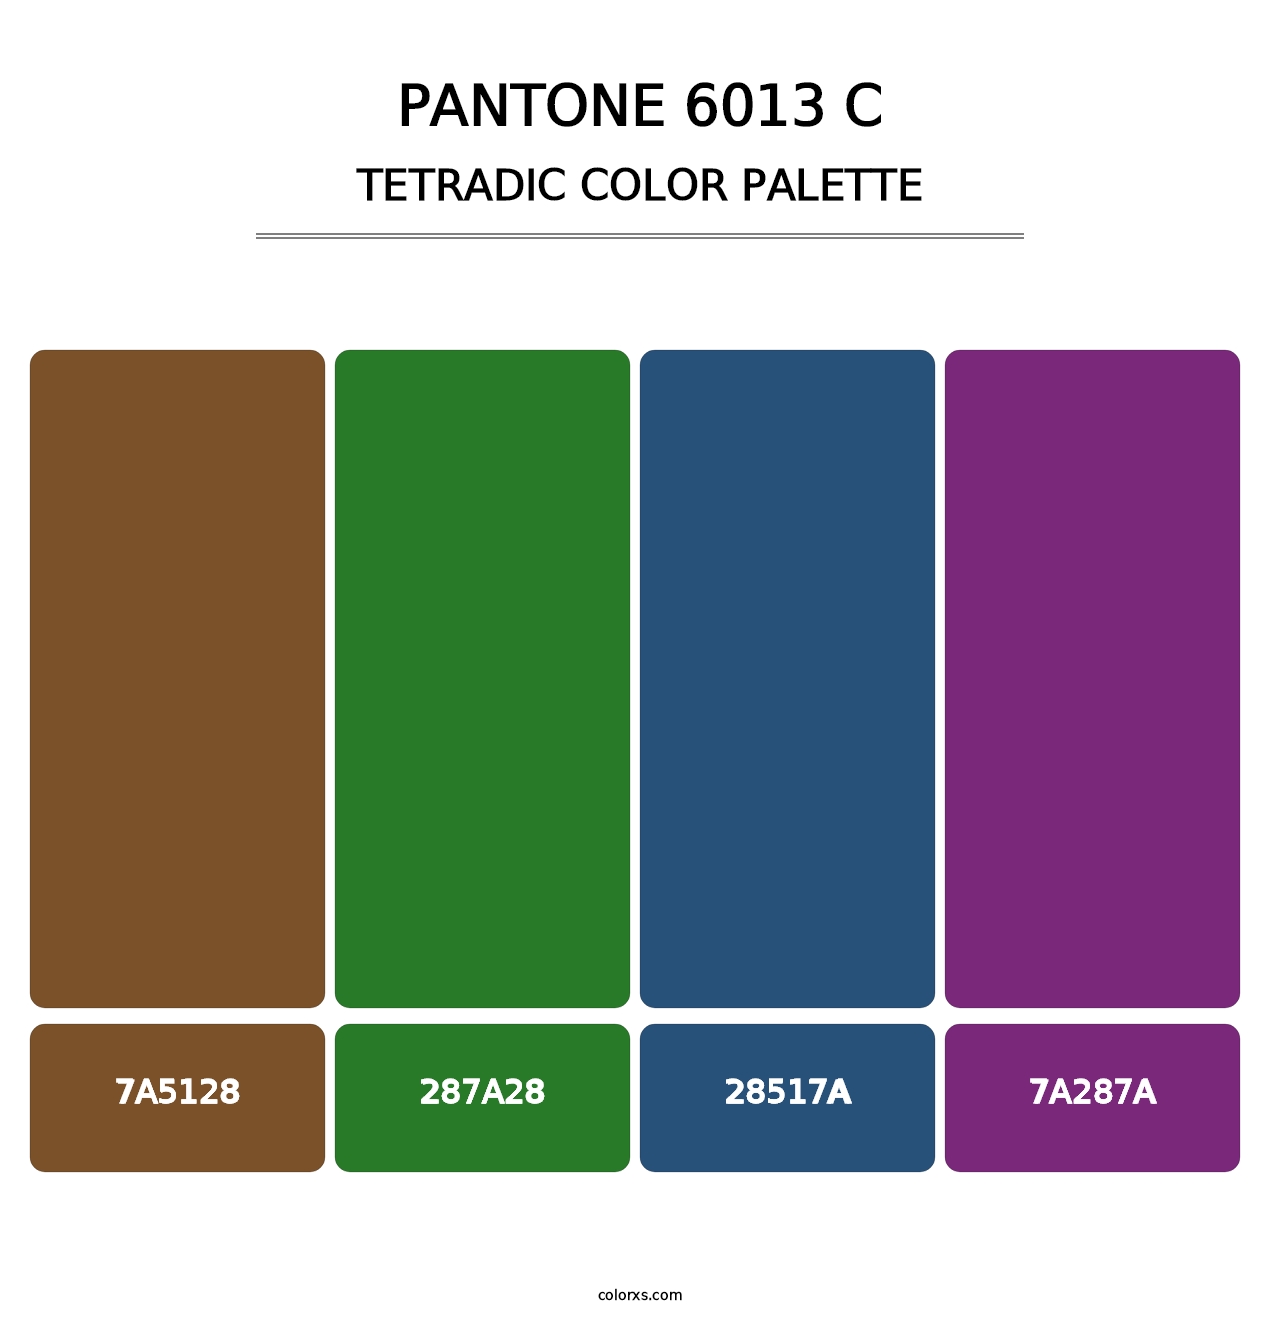 PANTONE 6013 C - Tetradic Color Palette